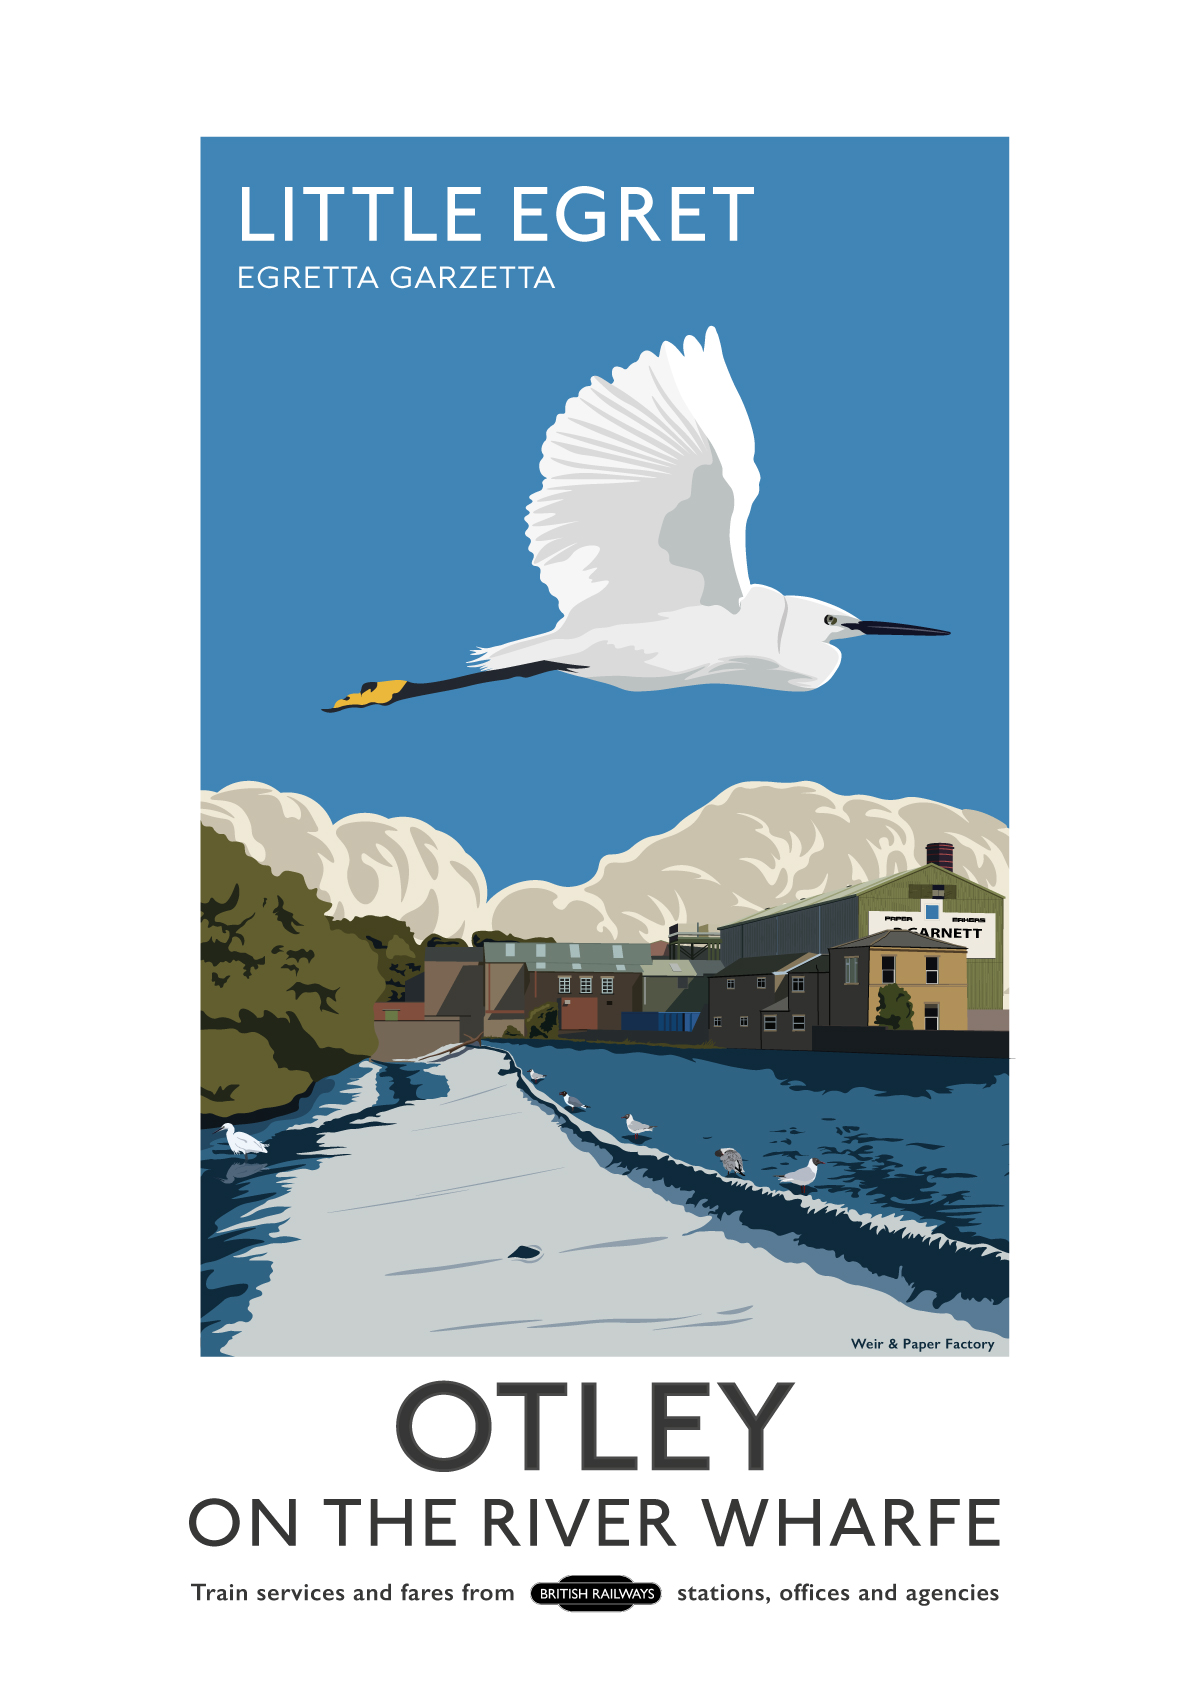 Otley Little Egret Poster